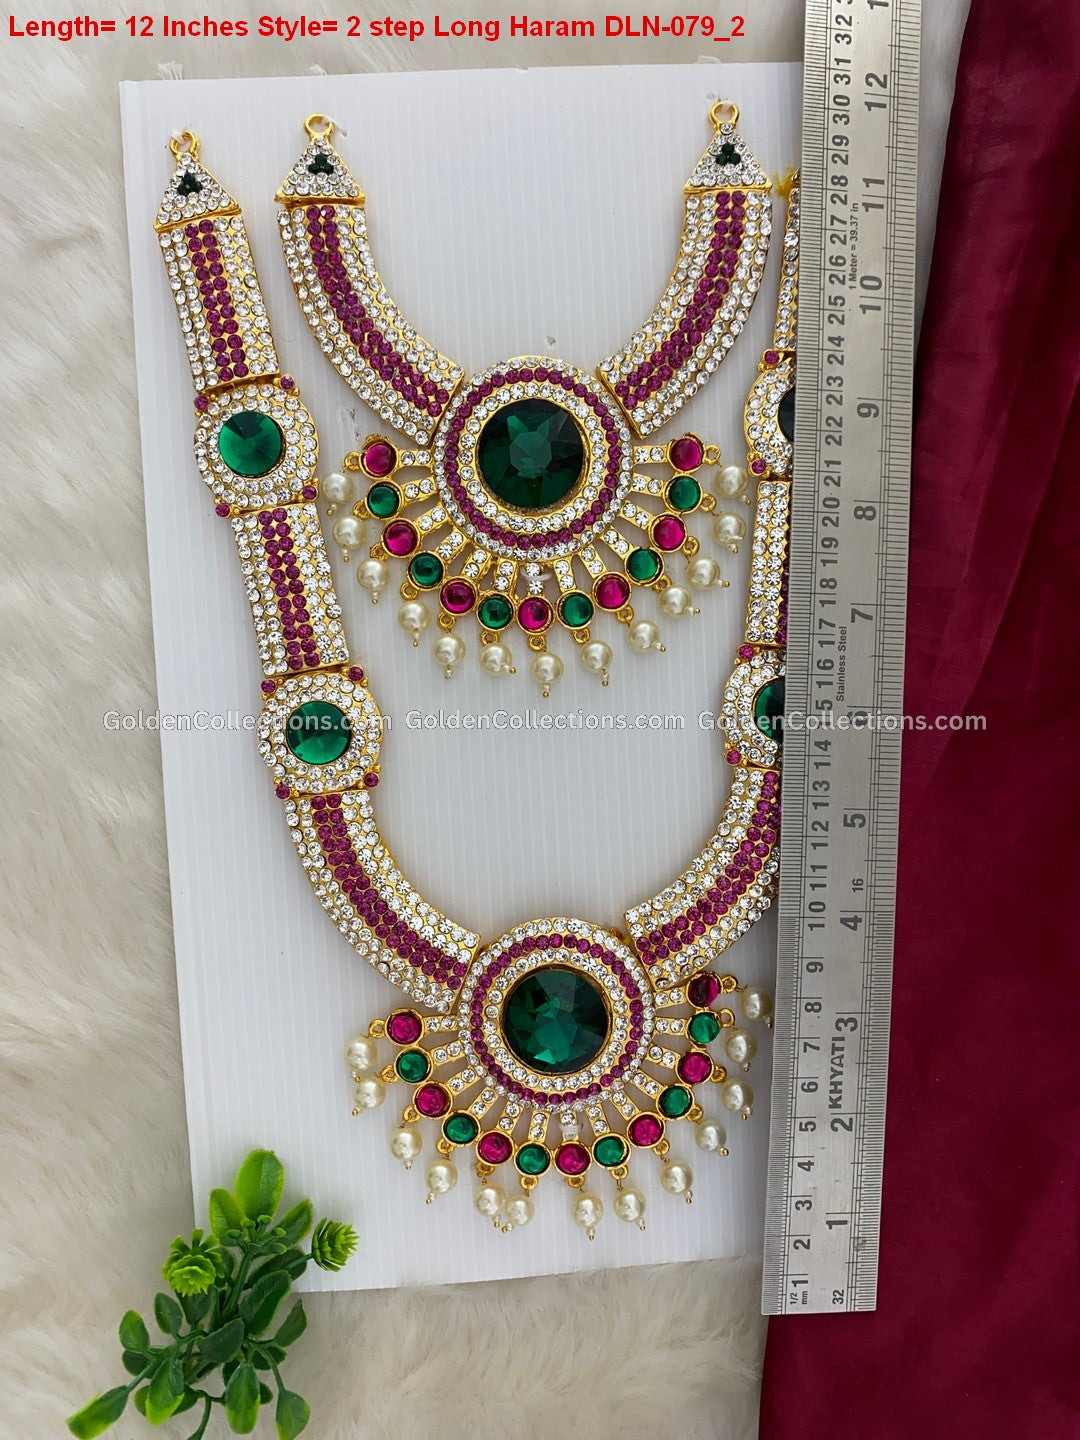 Deity Long Necklace - God Jewellery Set for Sale DLN-079 2